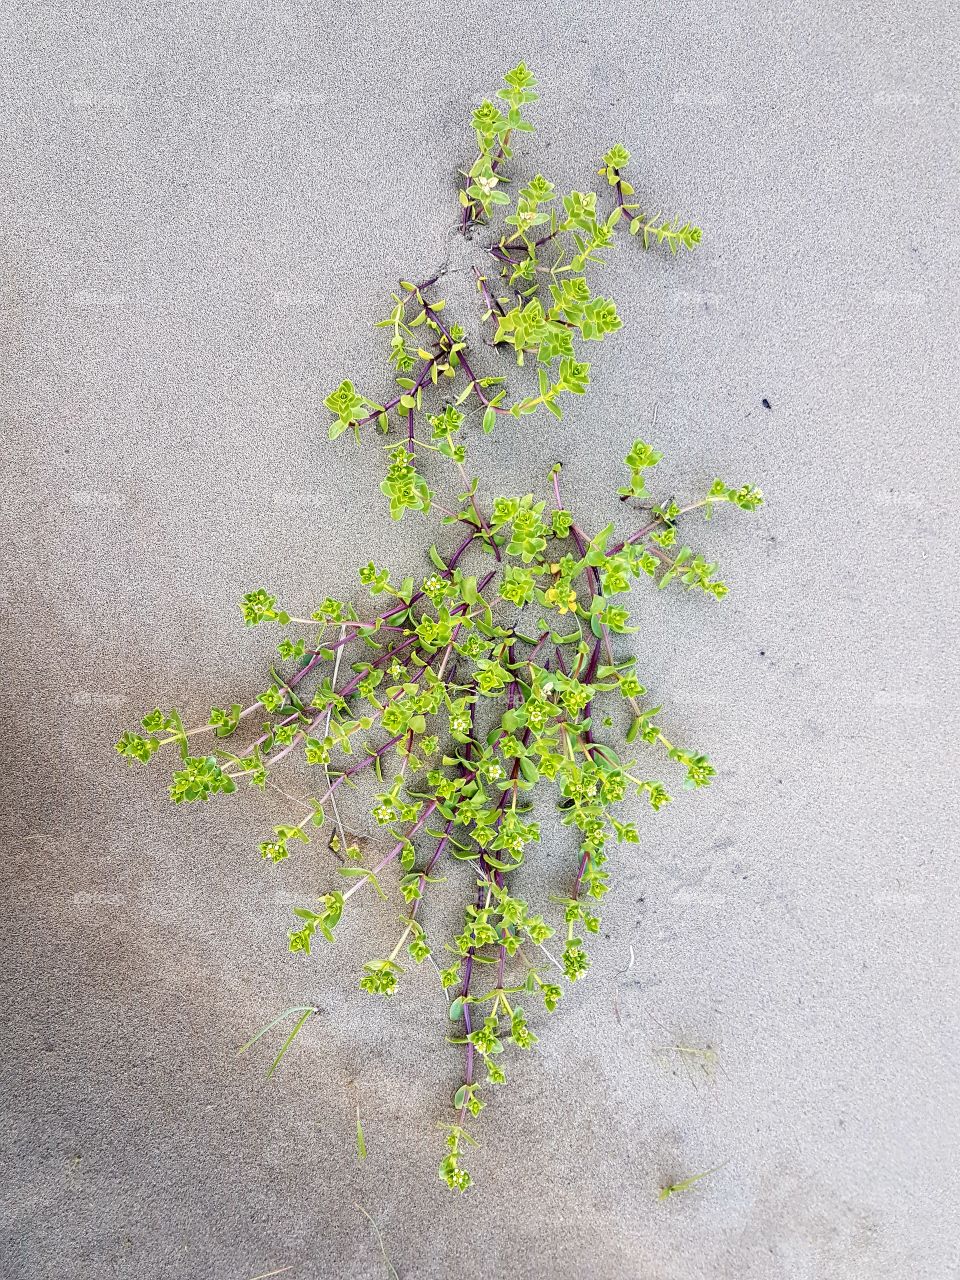 Green meets sand